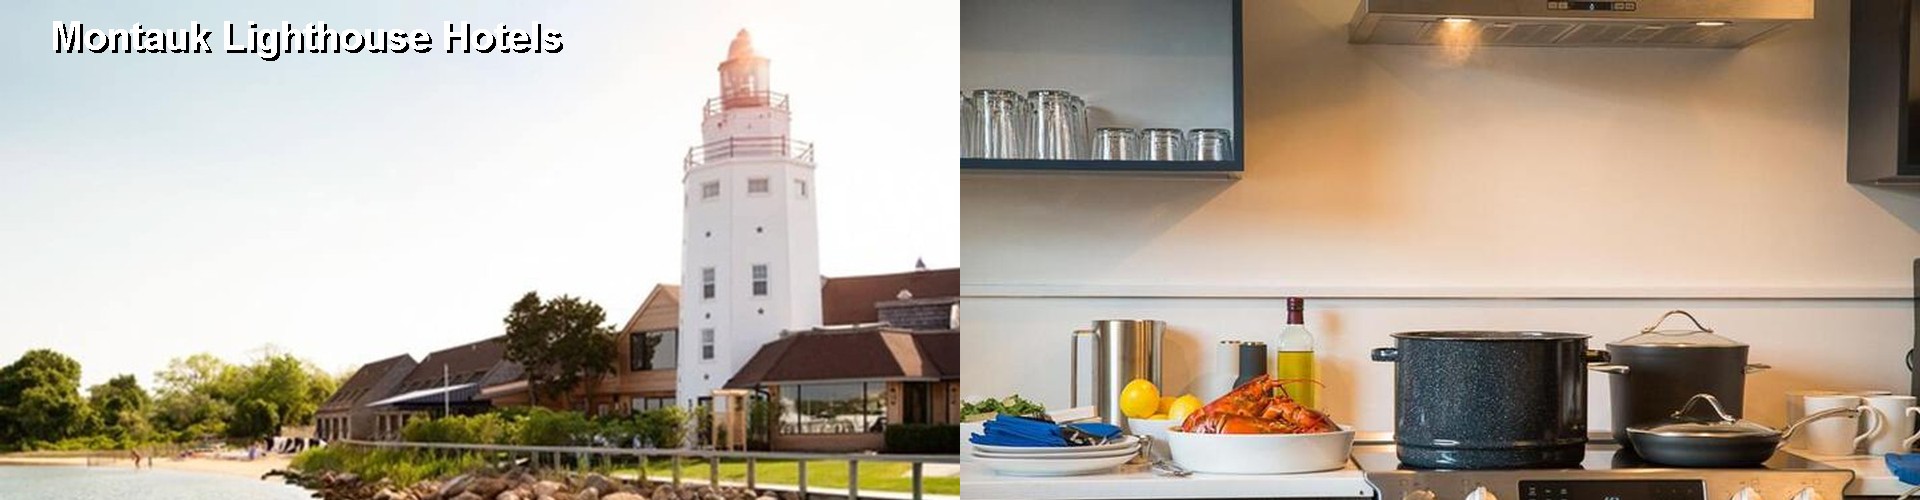 5 Best Hotels near Montauk Lighthouse